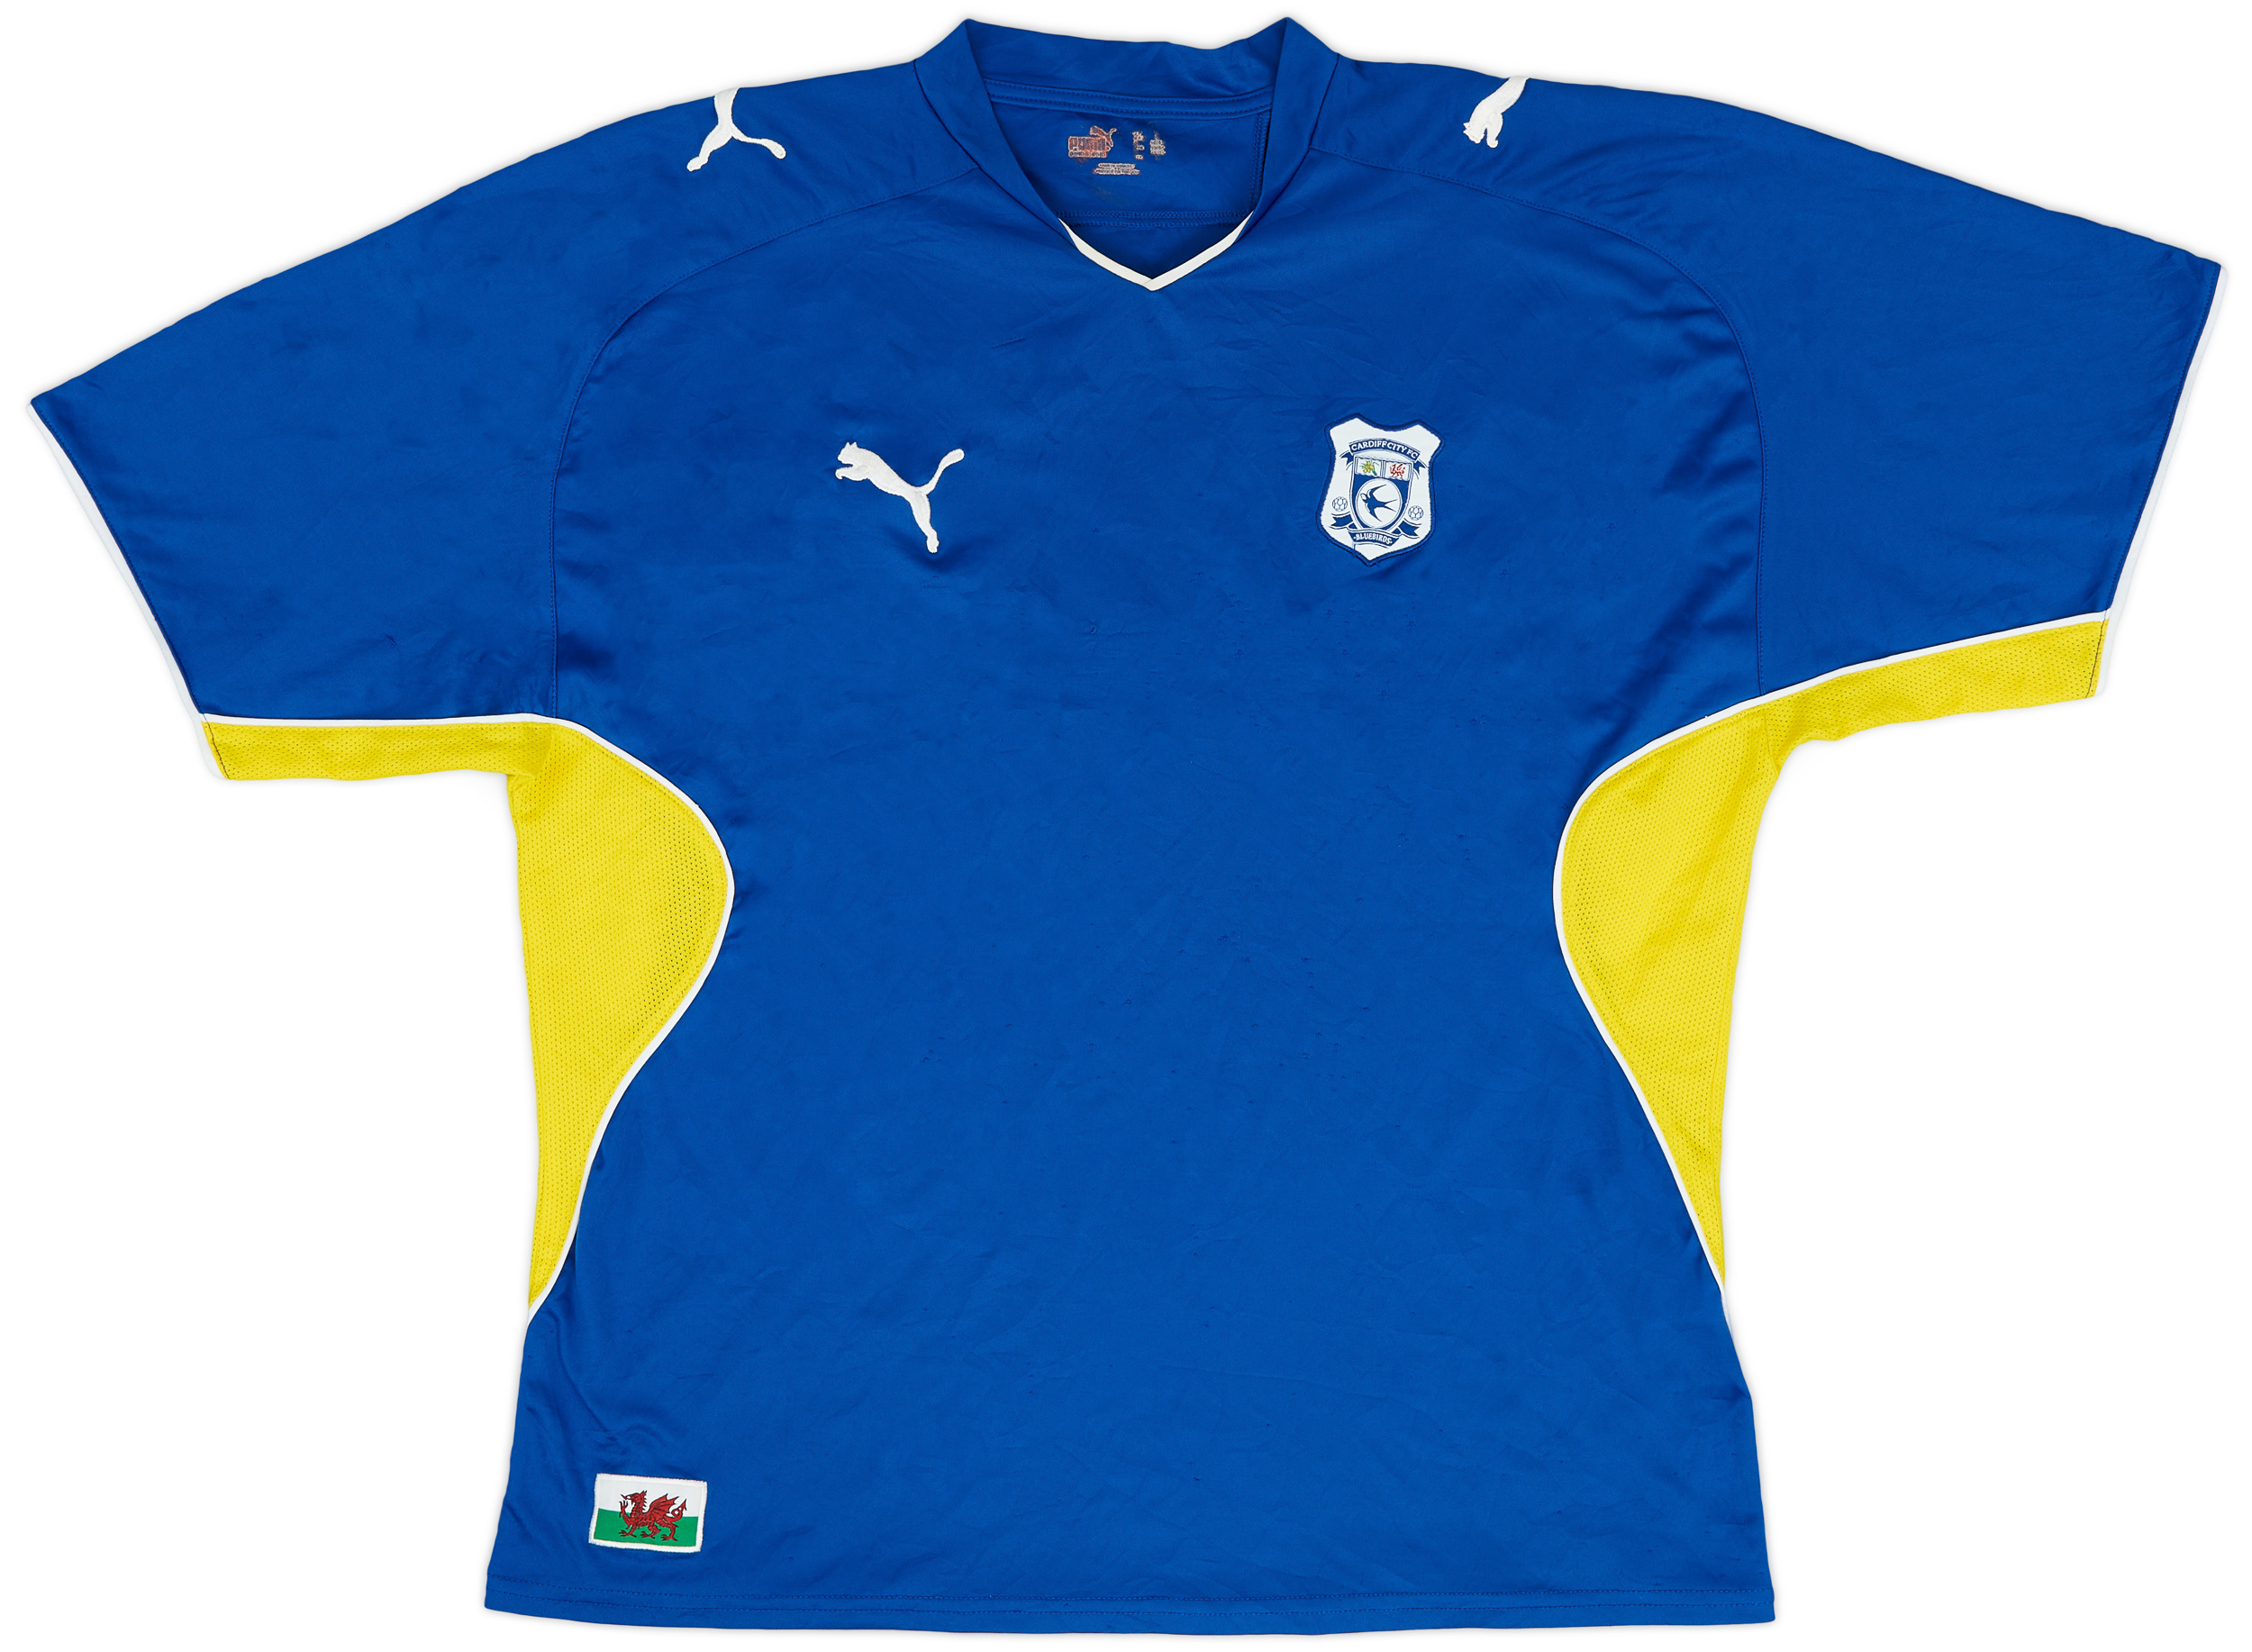 2009-10 Cardiff City Home Shirt - 7/10 - ()